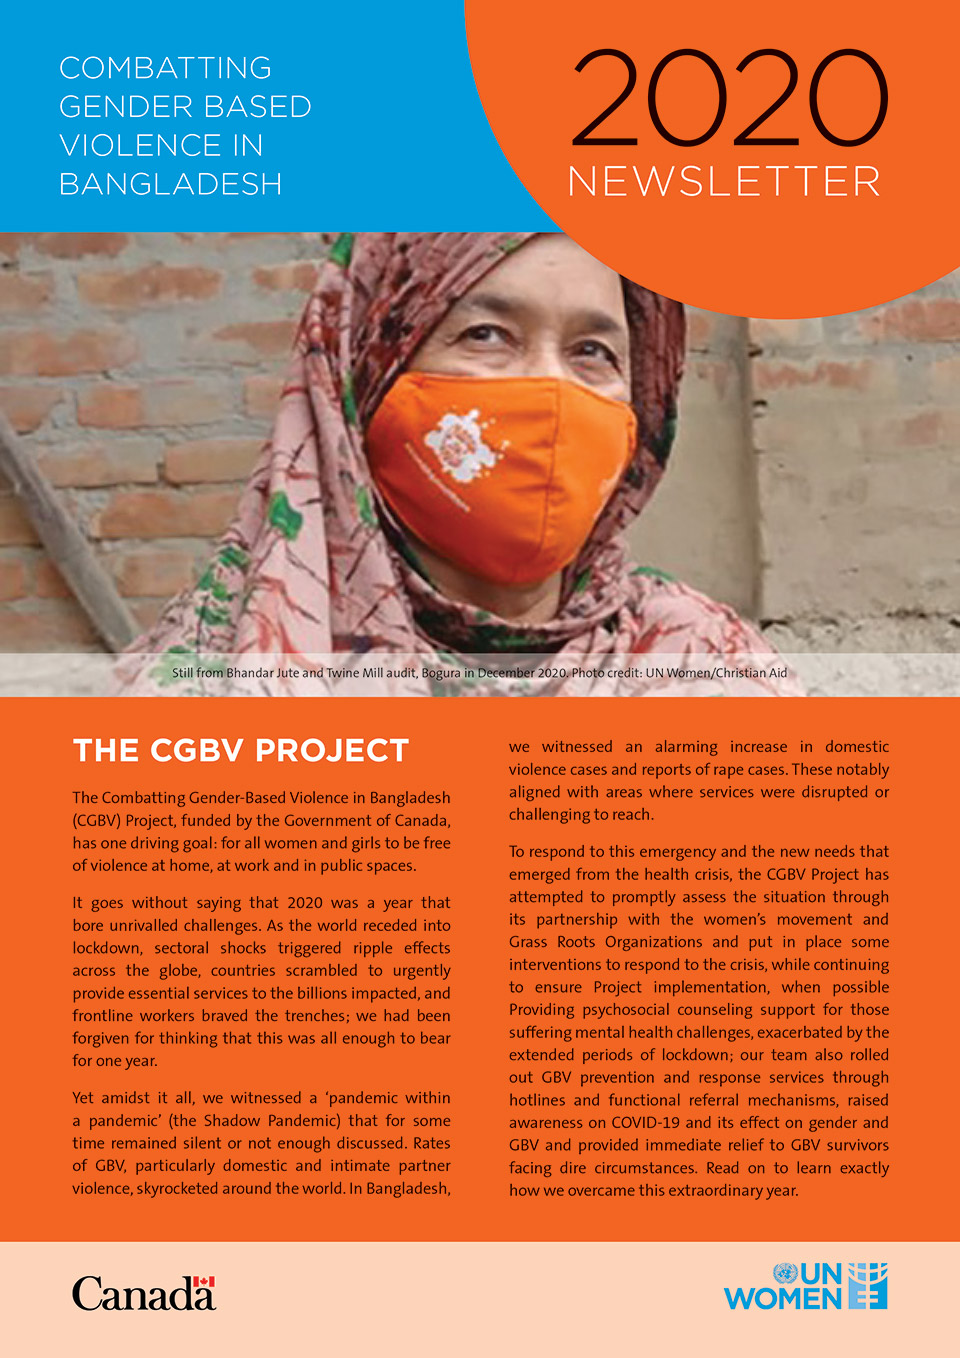 Newsletter 2020 from Combatting Gender Based Violence Project